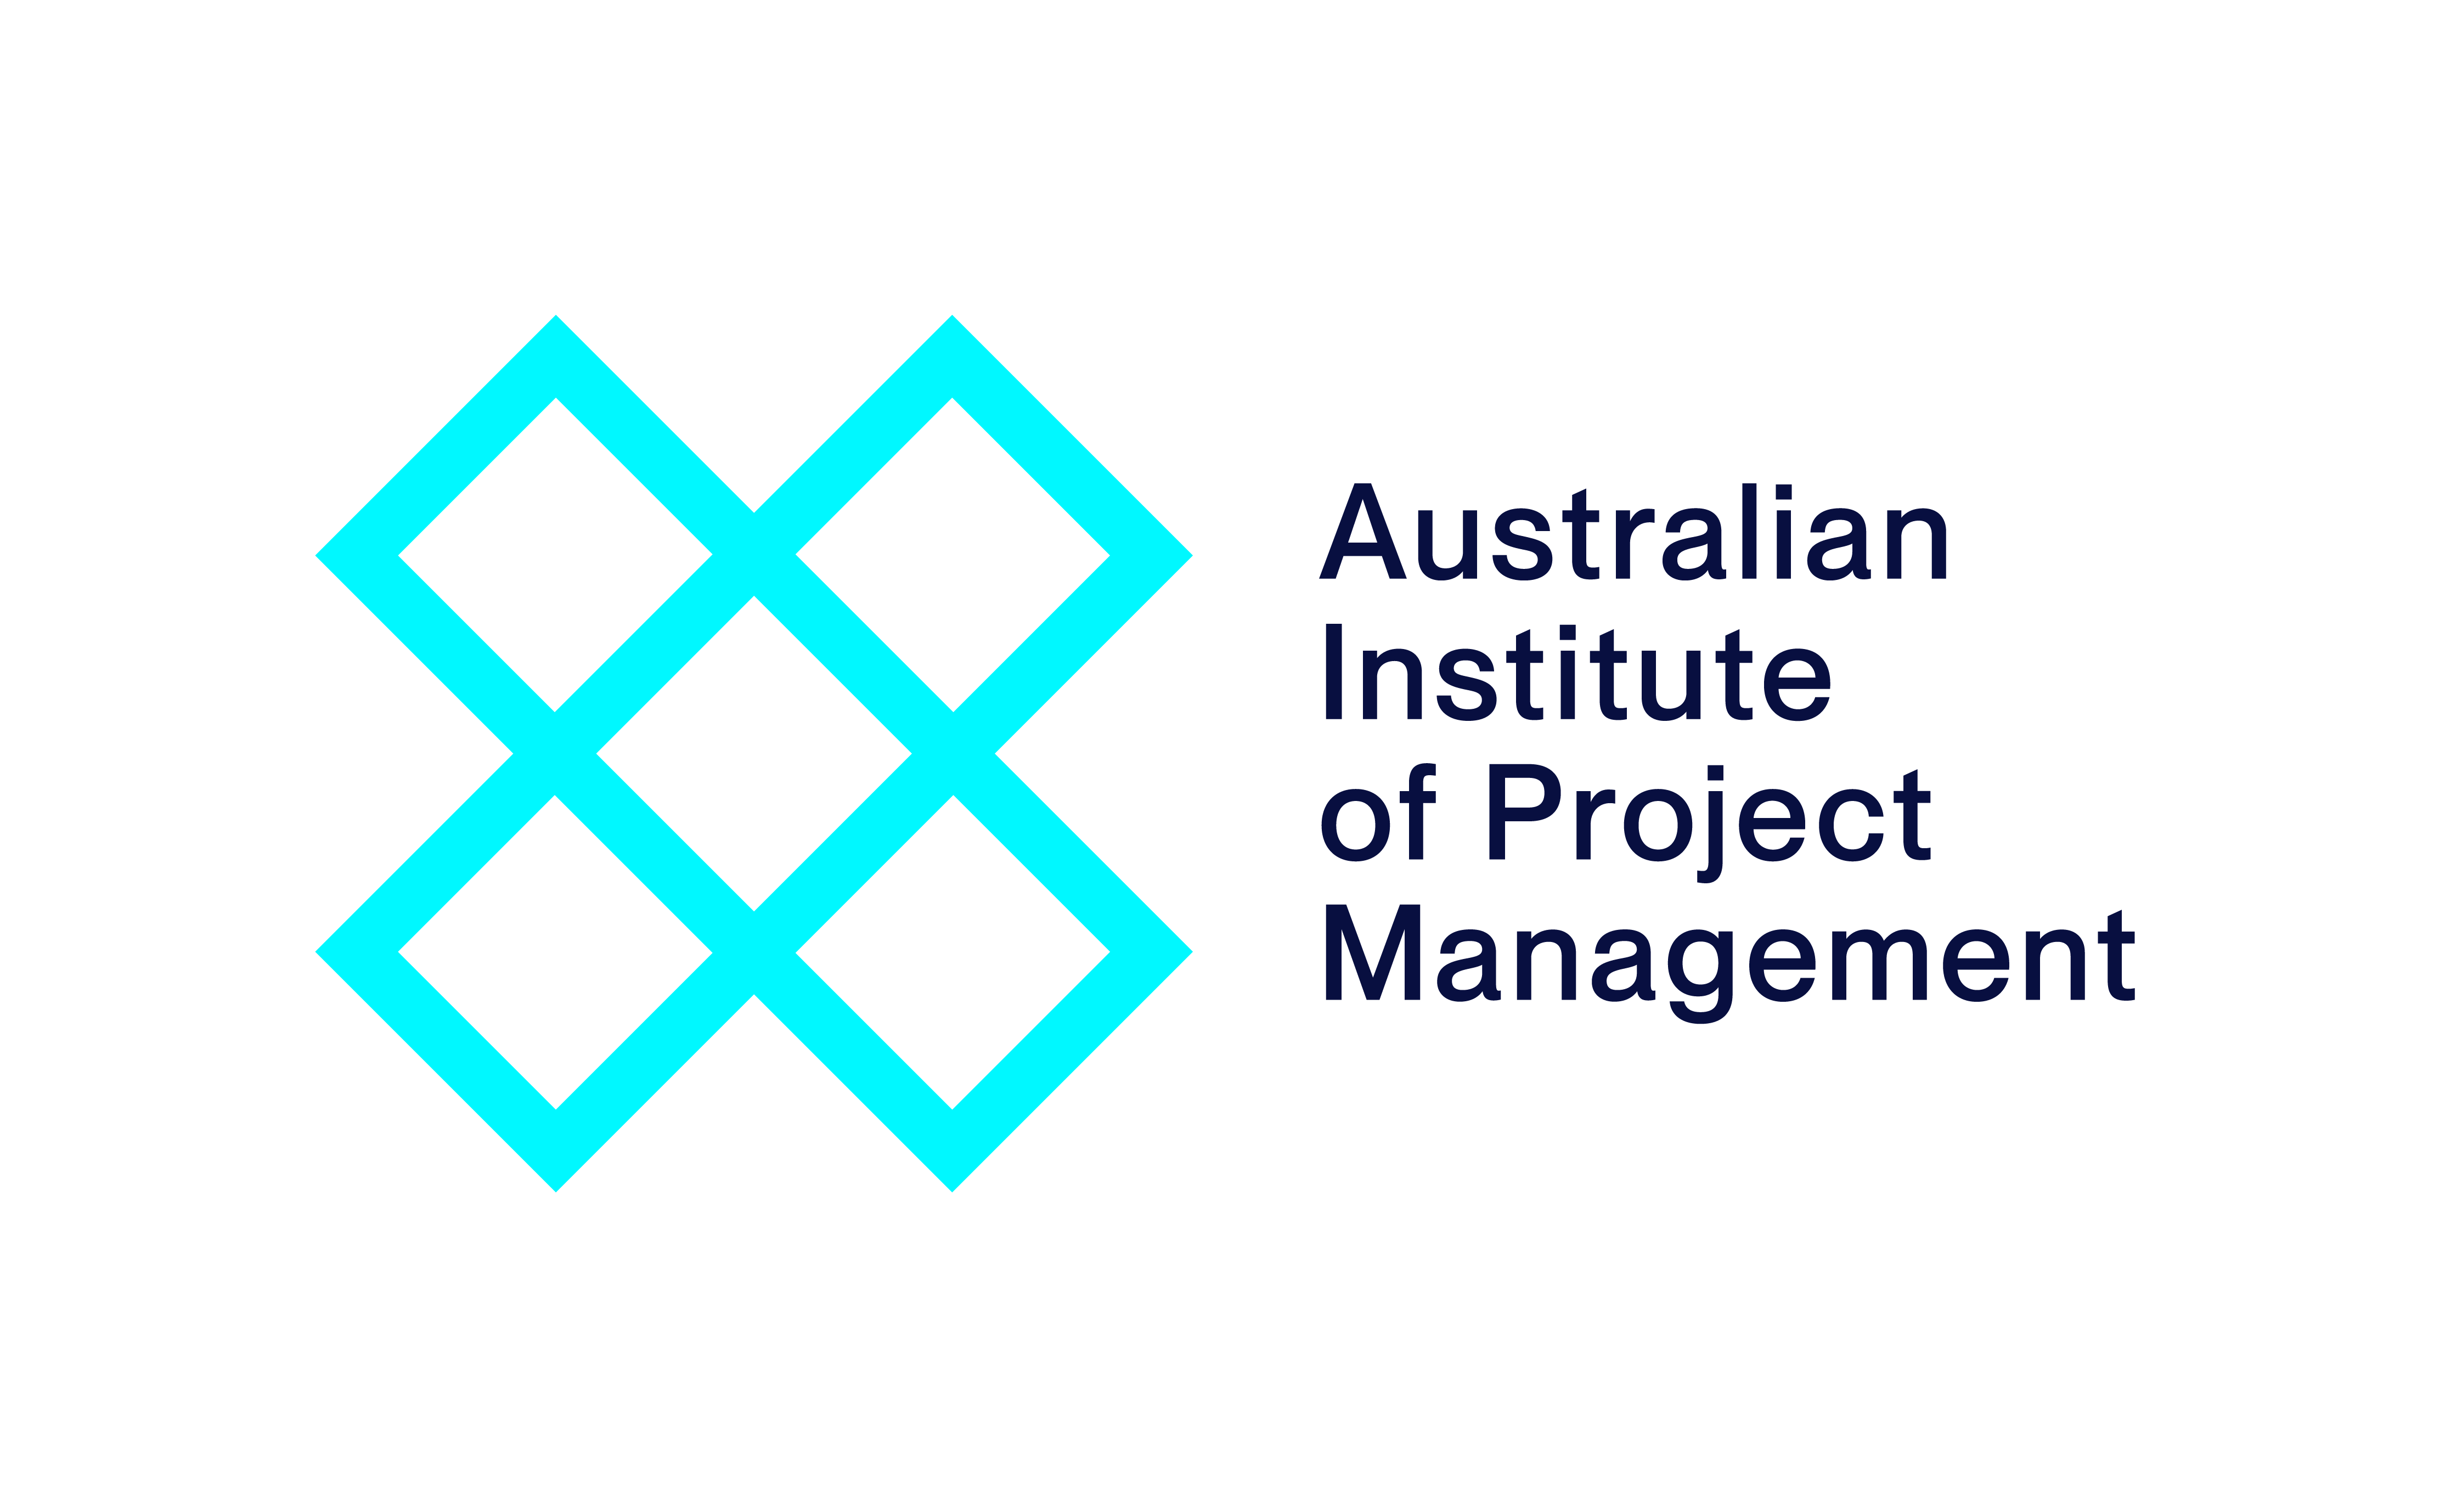 Australian Institute of Project Management